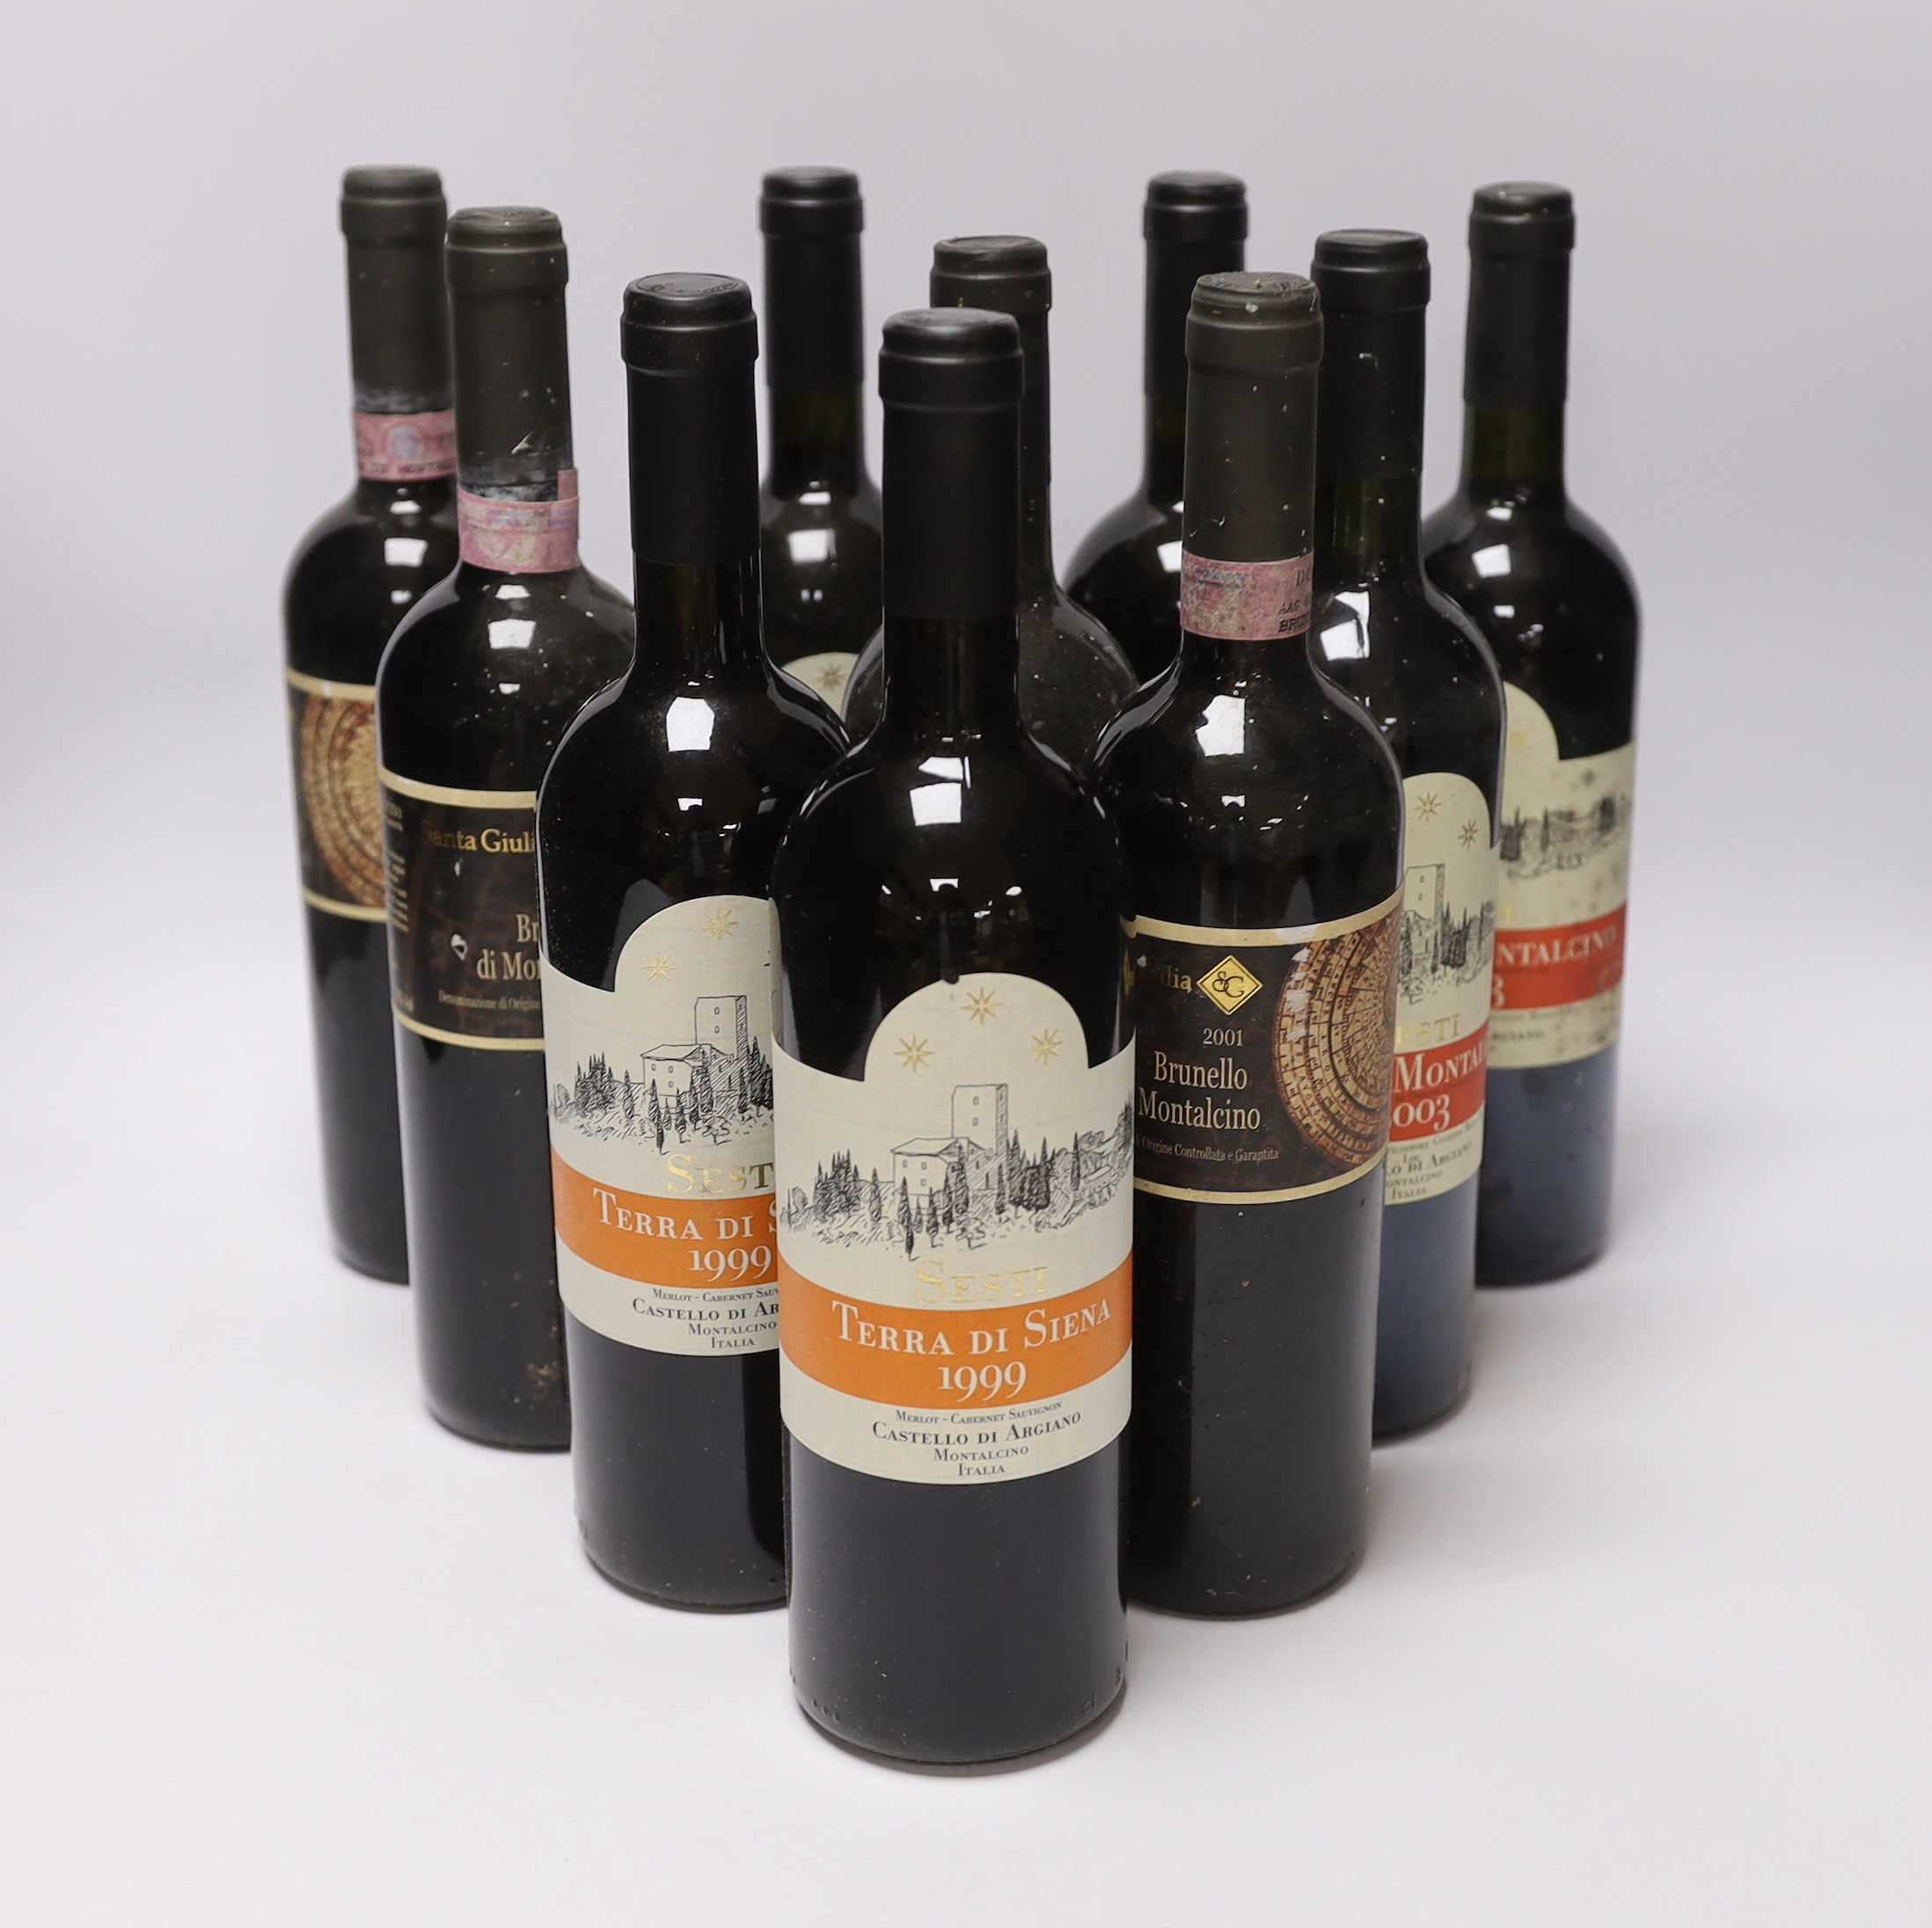 Ten bottles of red wine; three Rossi Di Montalcino 2003, four bottles of Terra Di Siena 1999 and